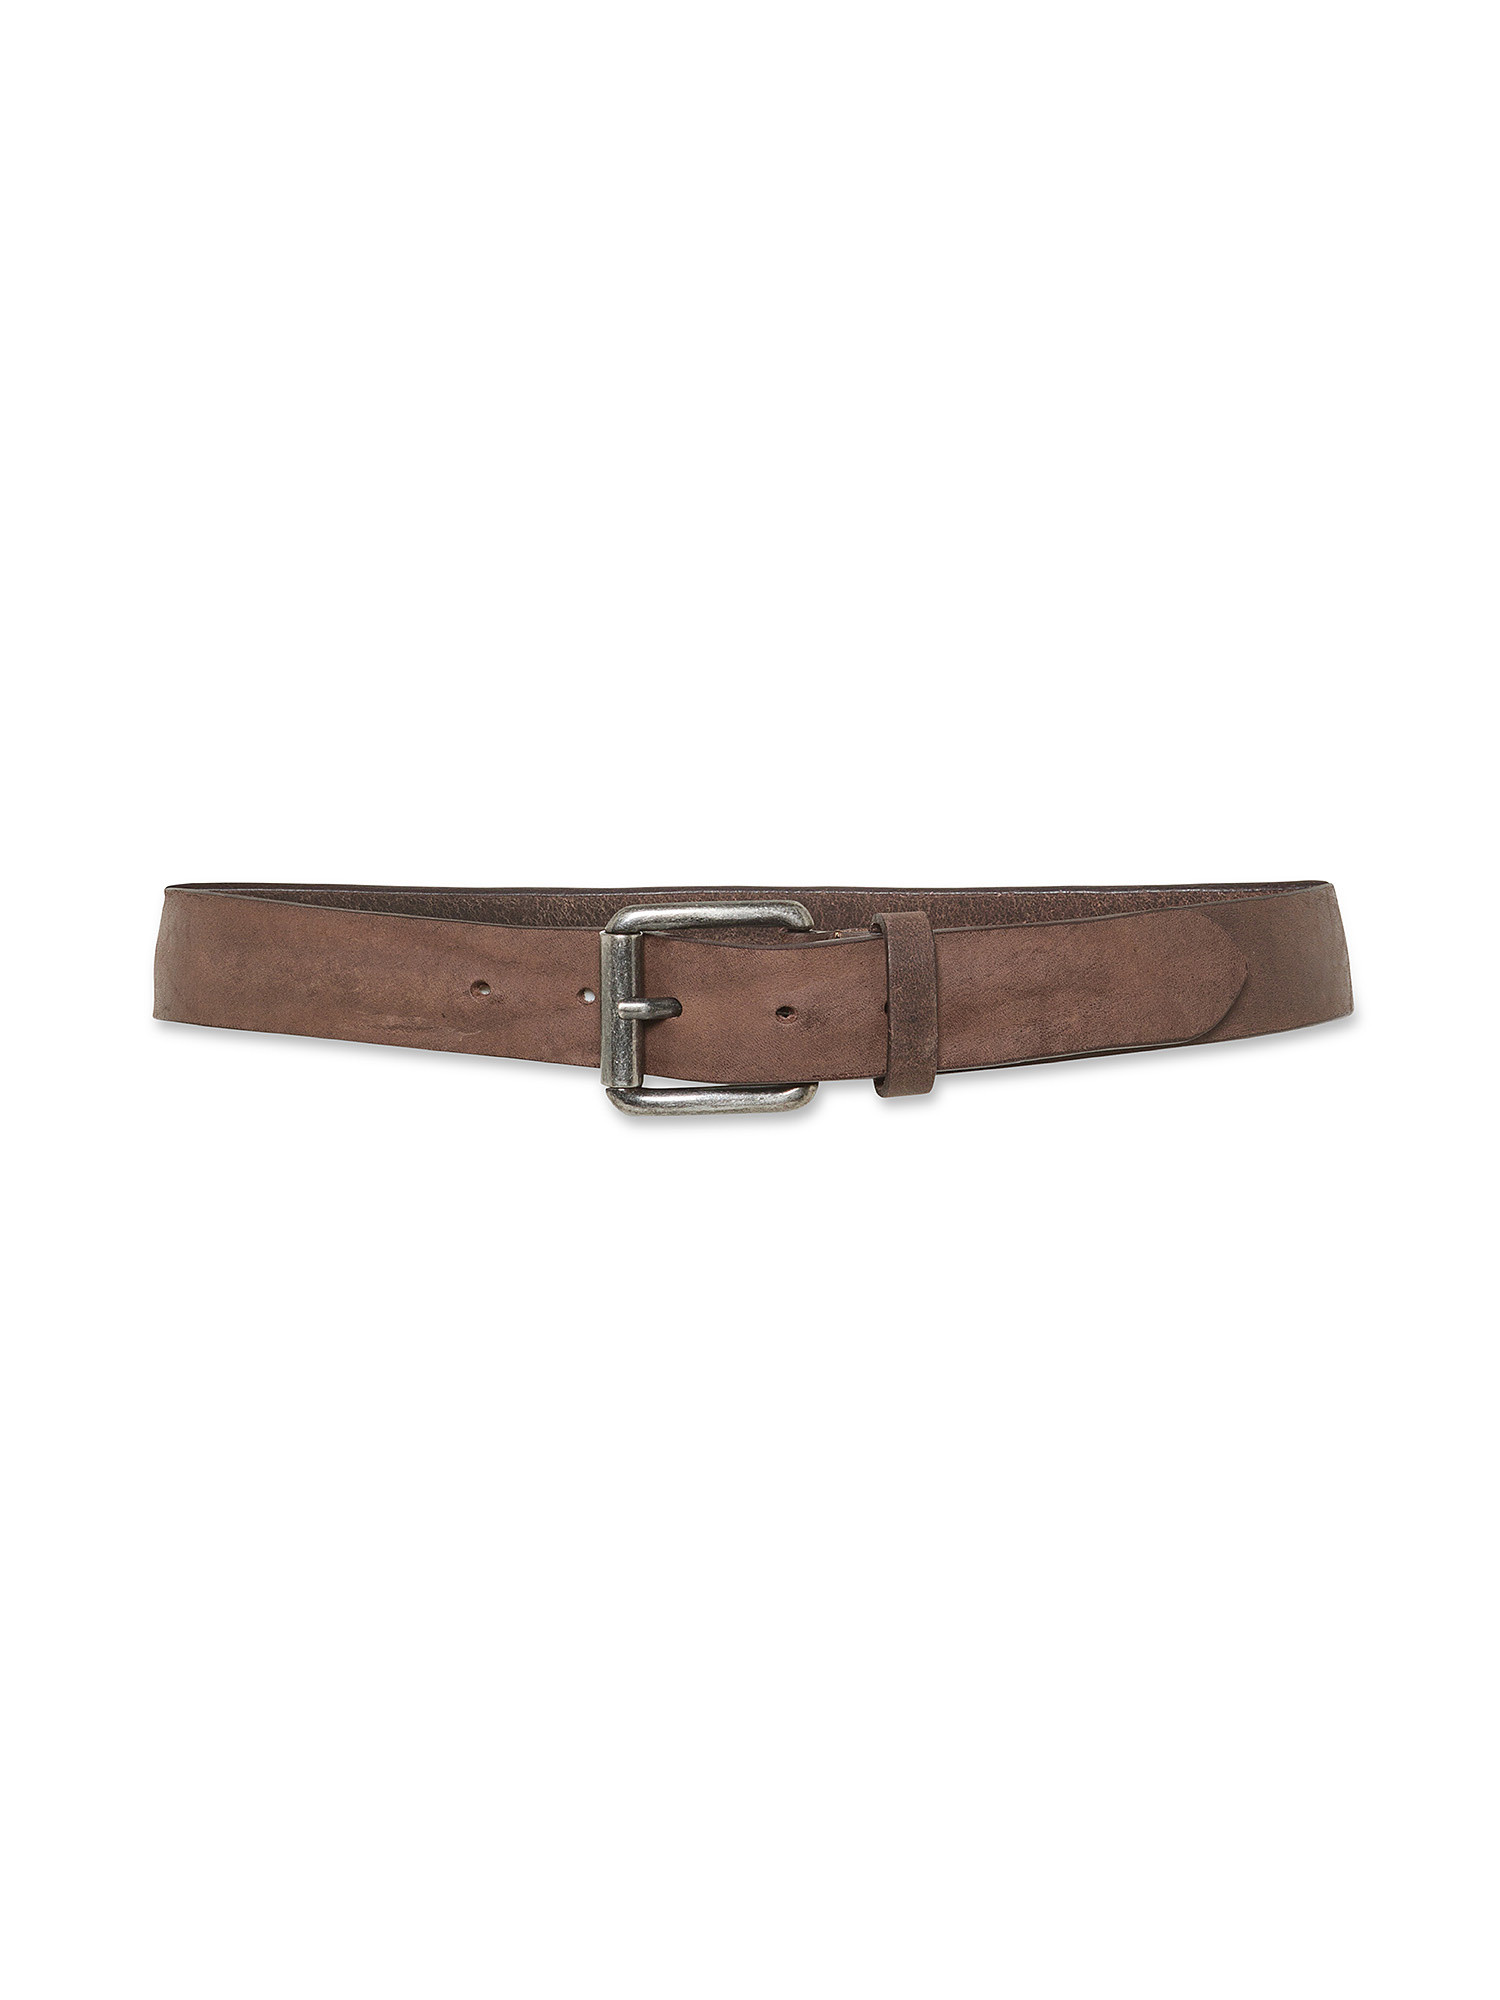 Luca D'Altieri - Leather belt, Brown, large image number 1